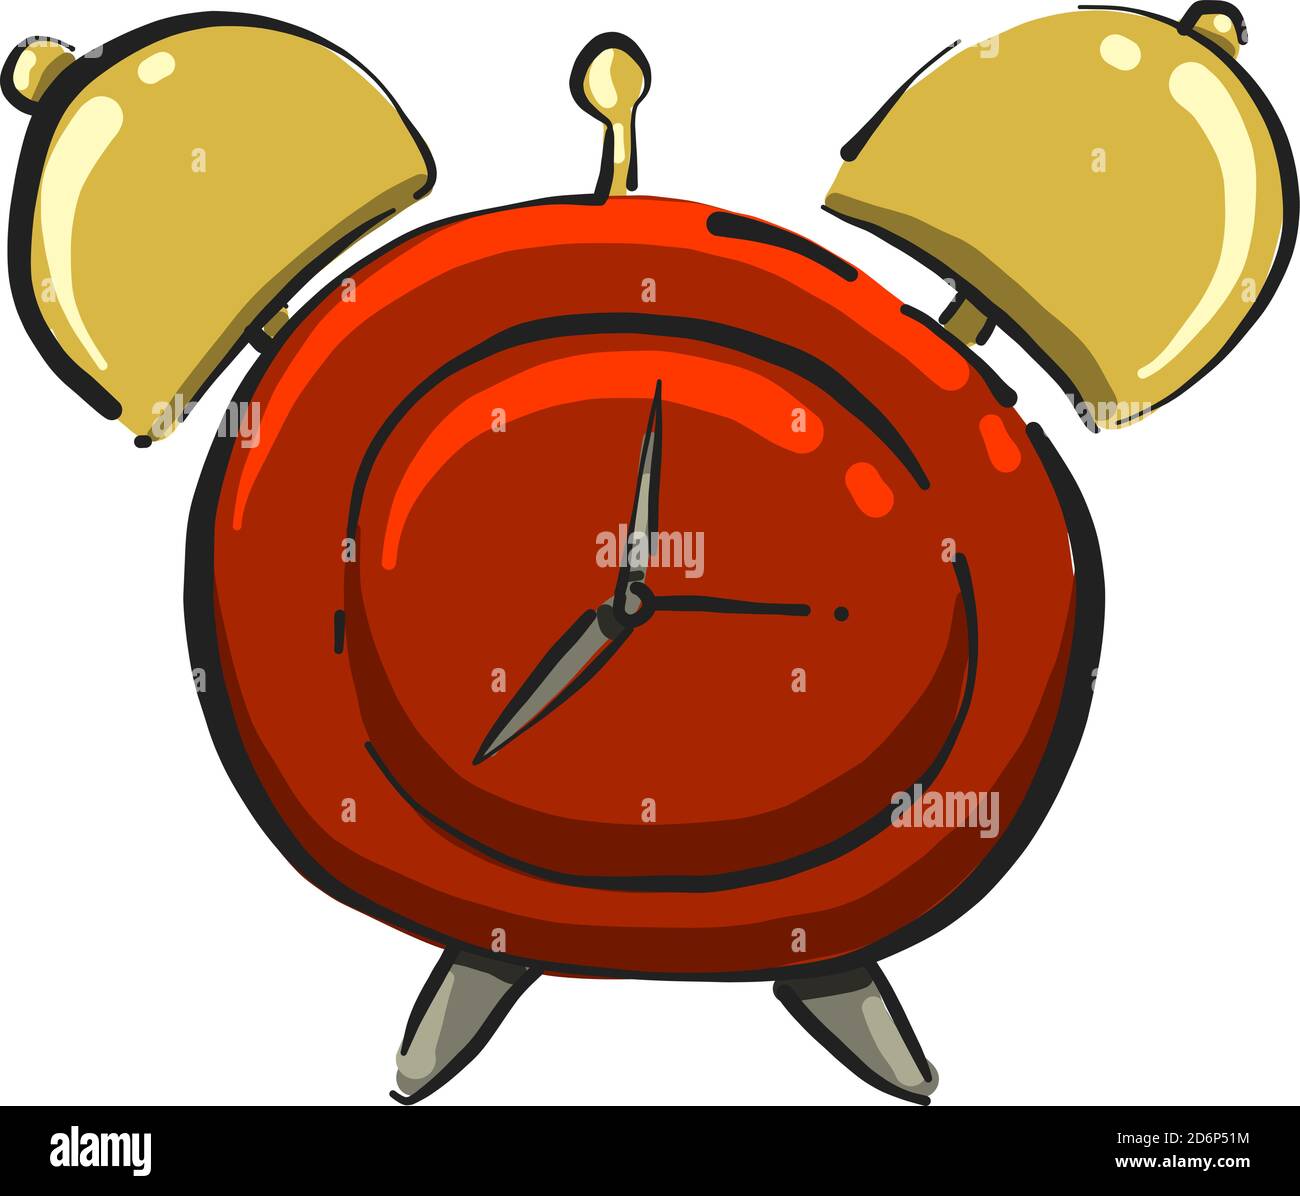 https://c8.alamy.com/comp/2D6P51M/alarm-clock-illustration-vector-on-white-background-2D6P51M.jpg